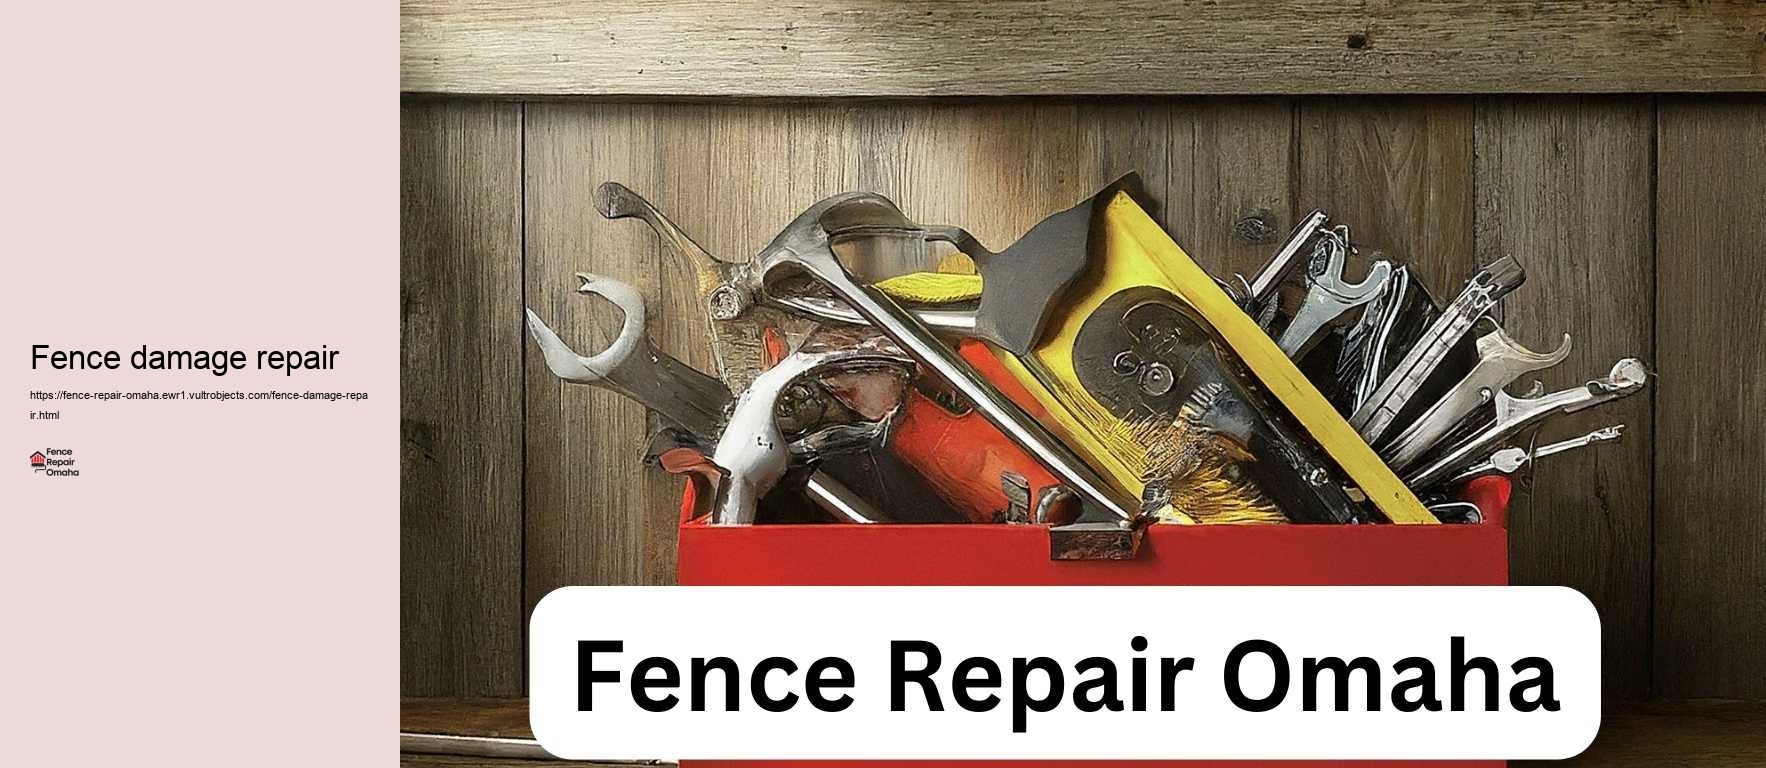 Fence damage repair